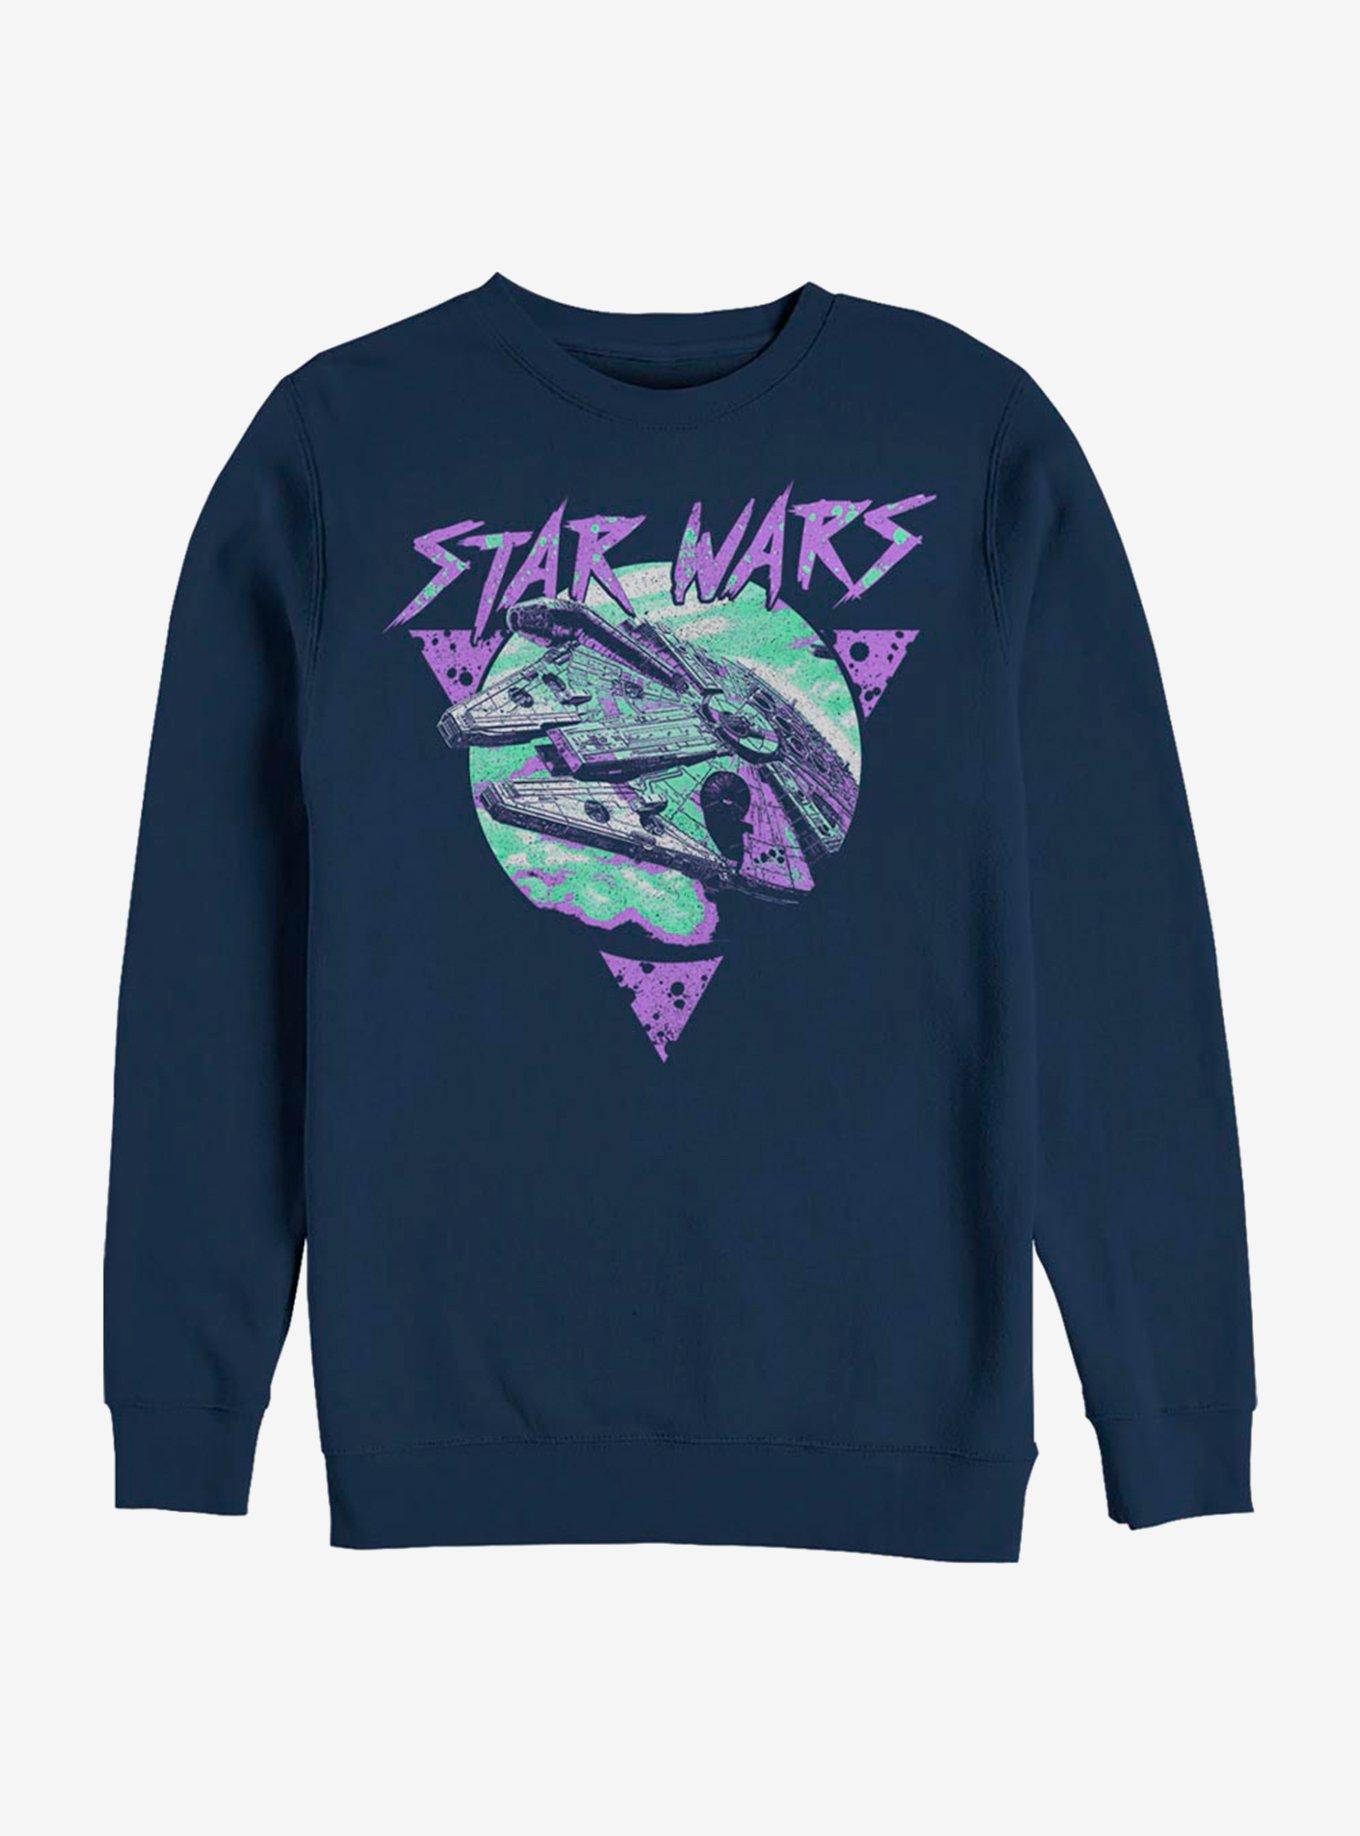 Star Wars New Wave Falcon Sweatshirt, NAVY, hi-res